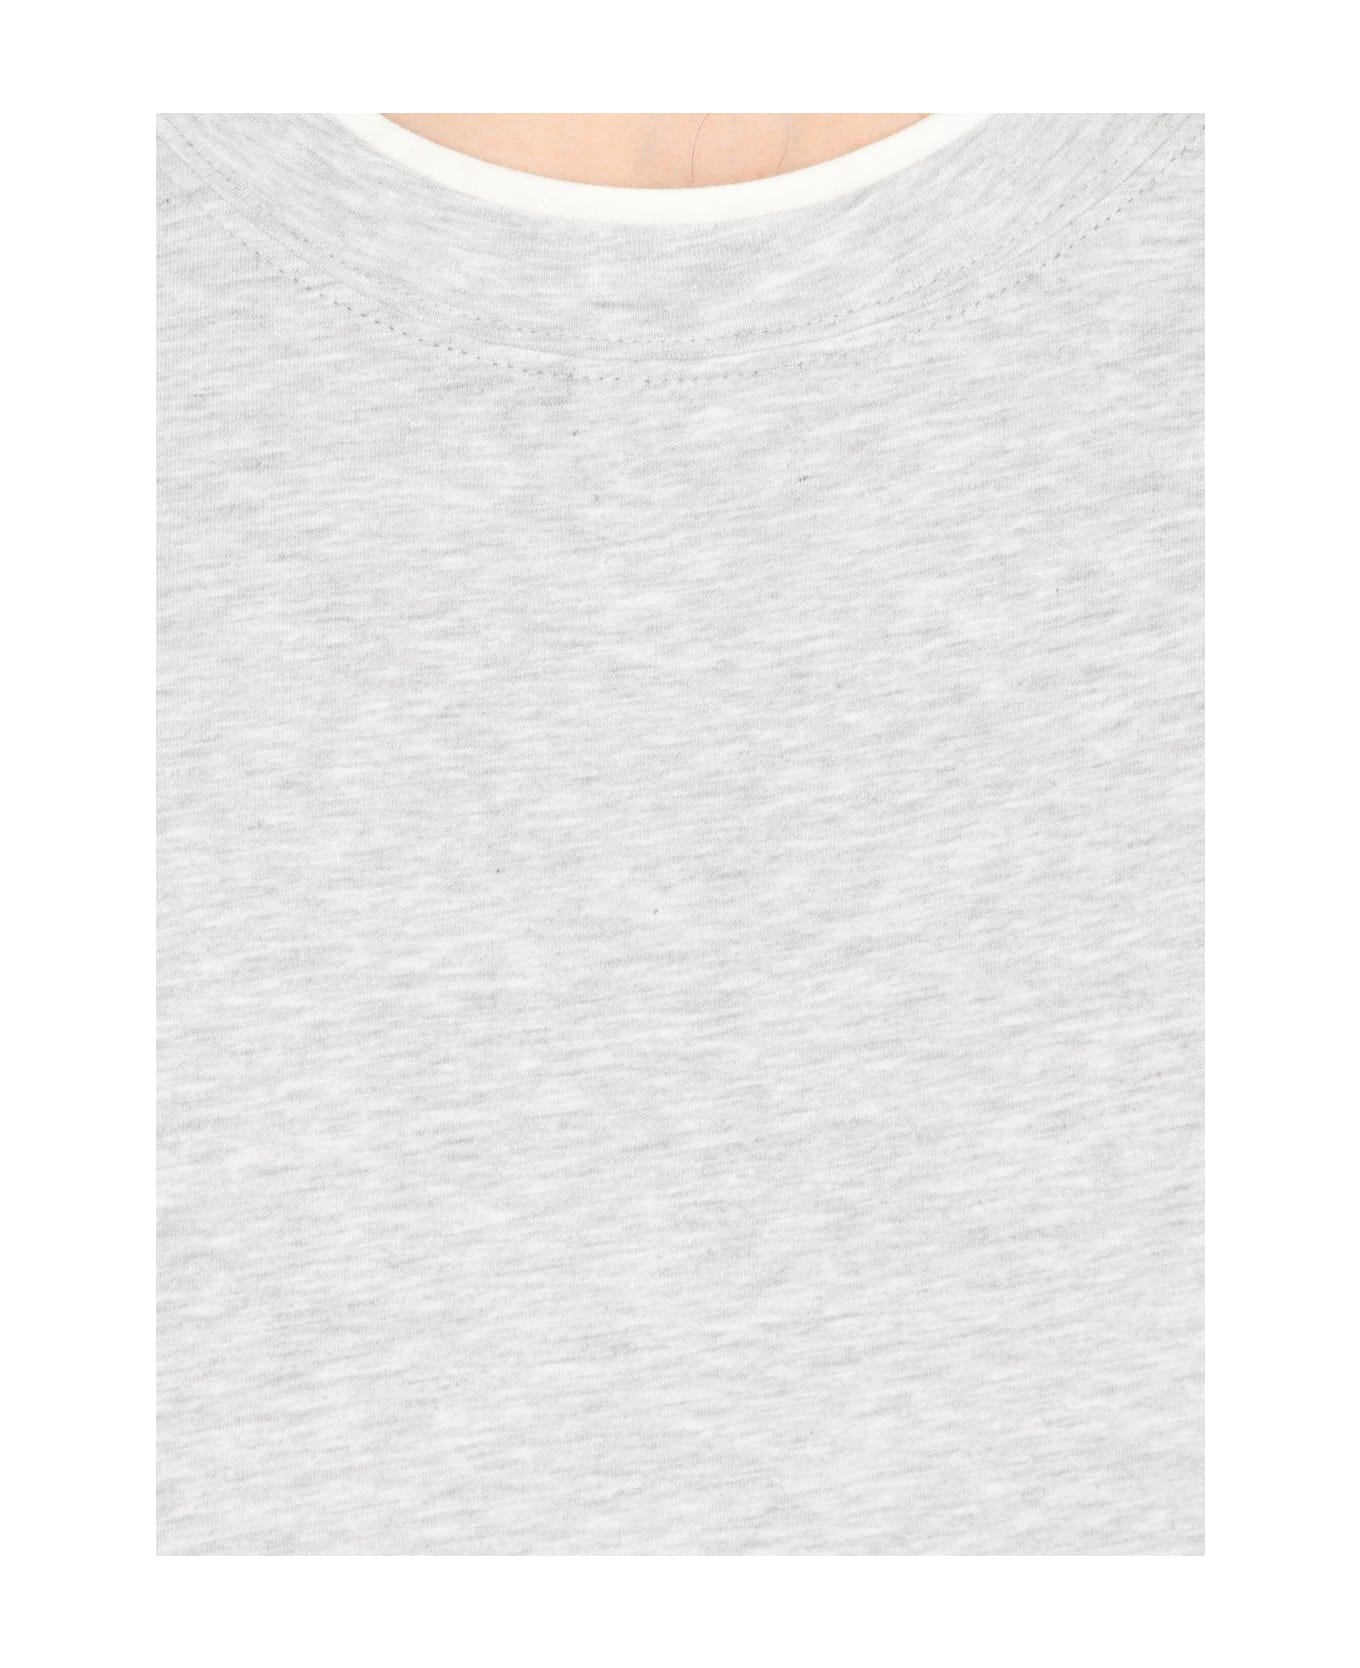 Brunello Cucinelli Layered-effect Crewneck T-shirt - Grey/white